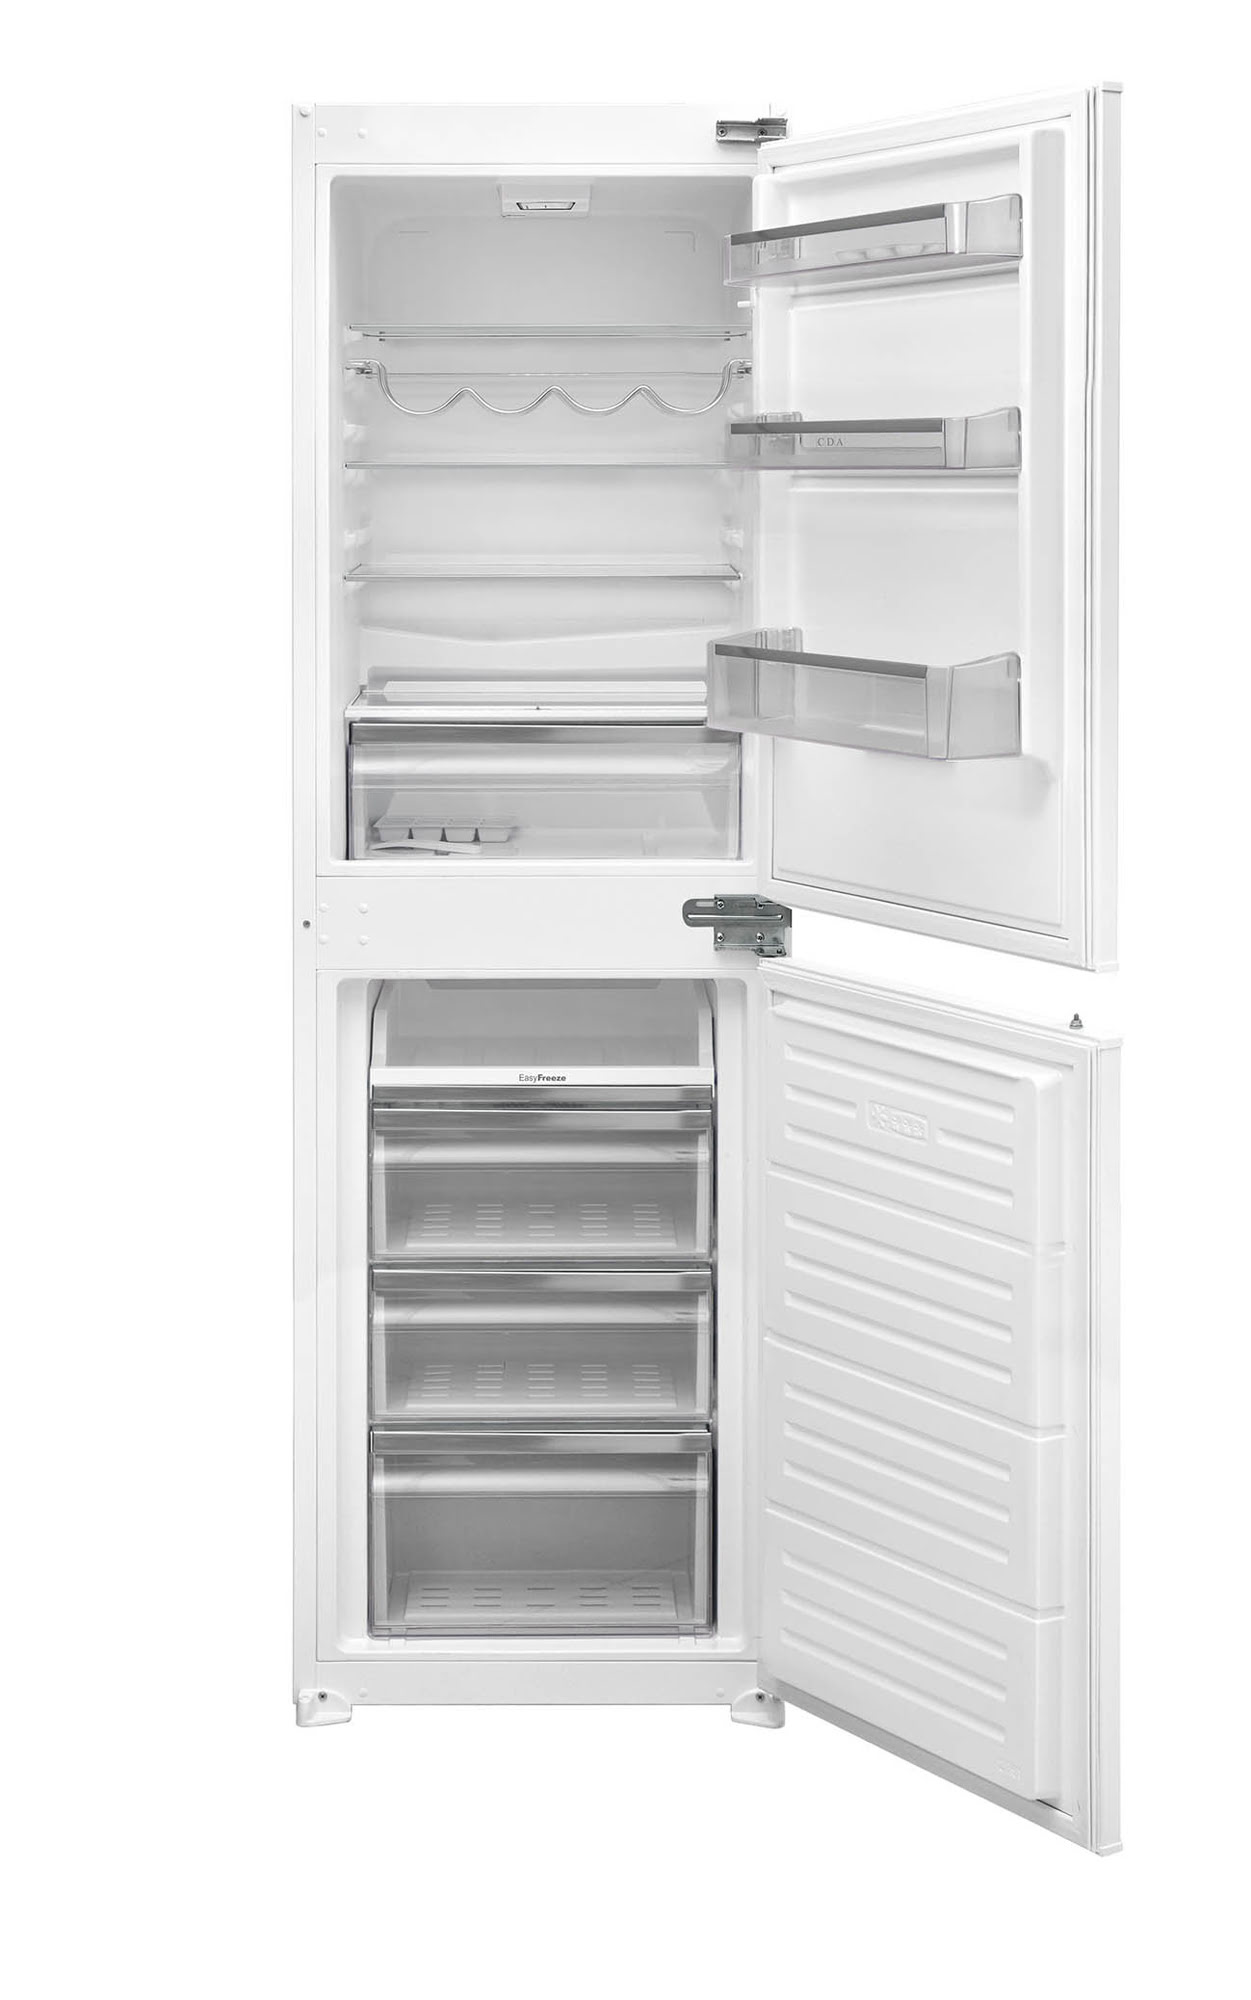 Integrated 50/50 fridge freezer